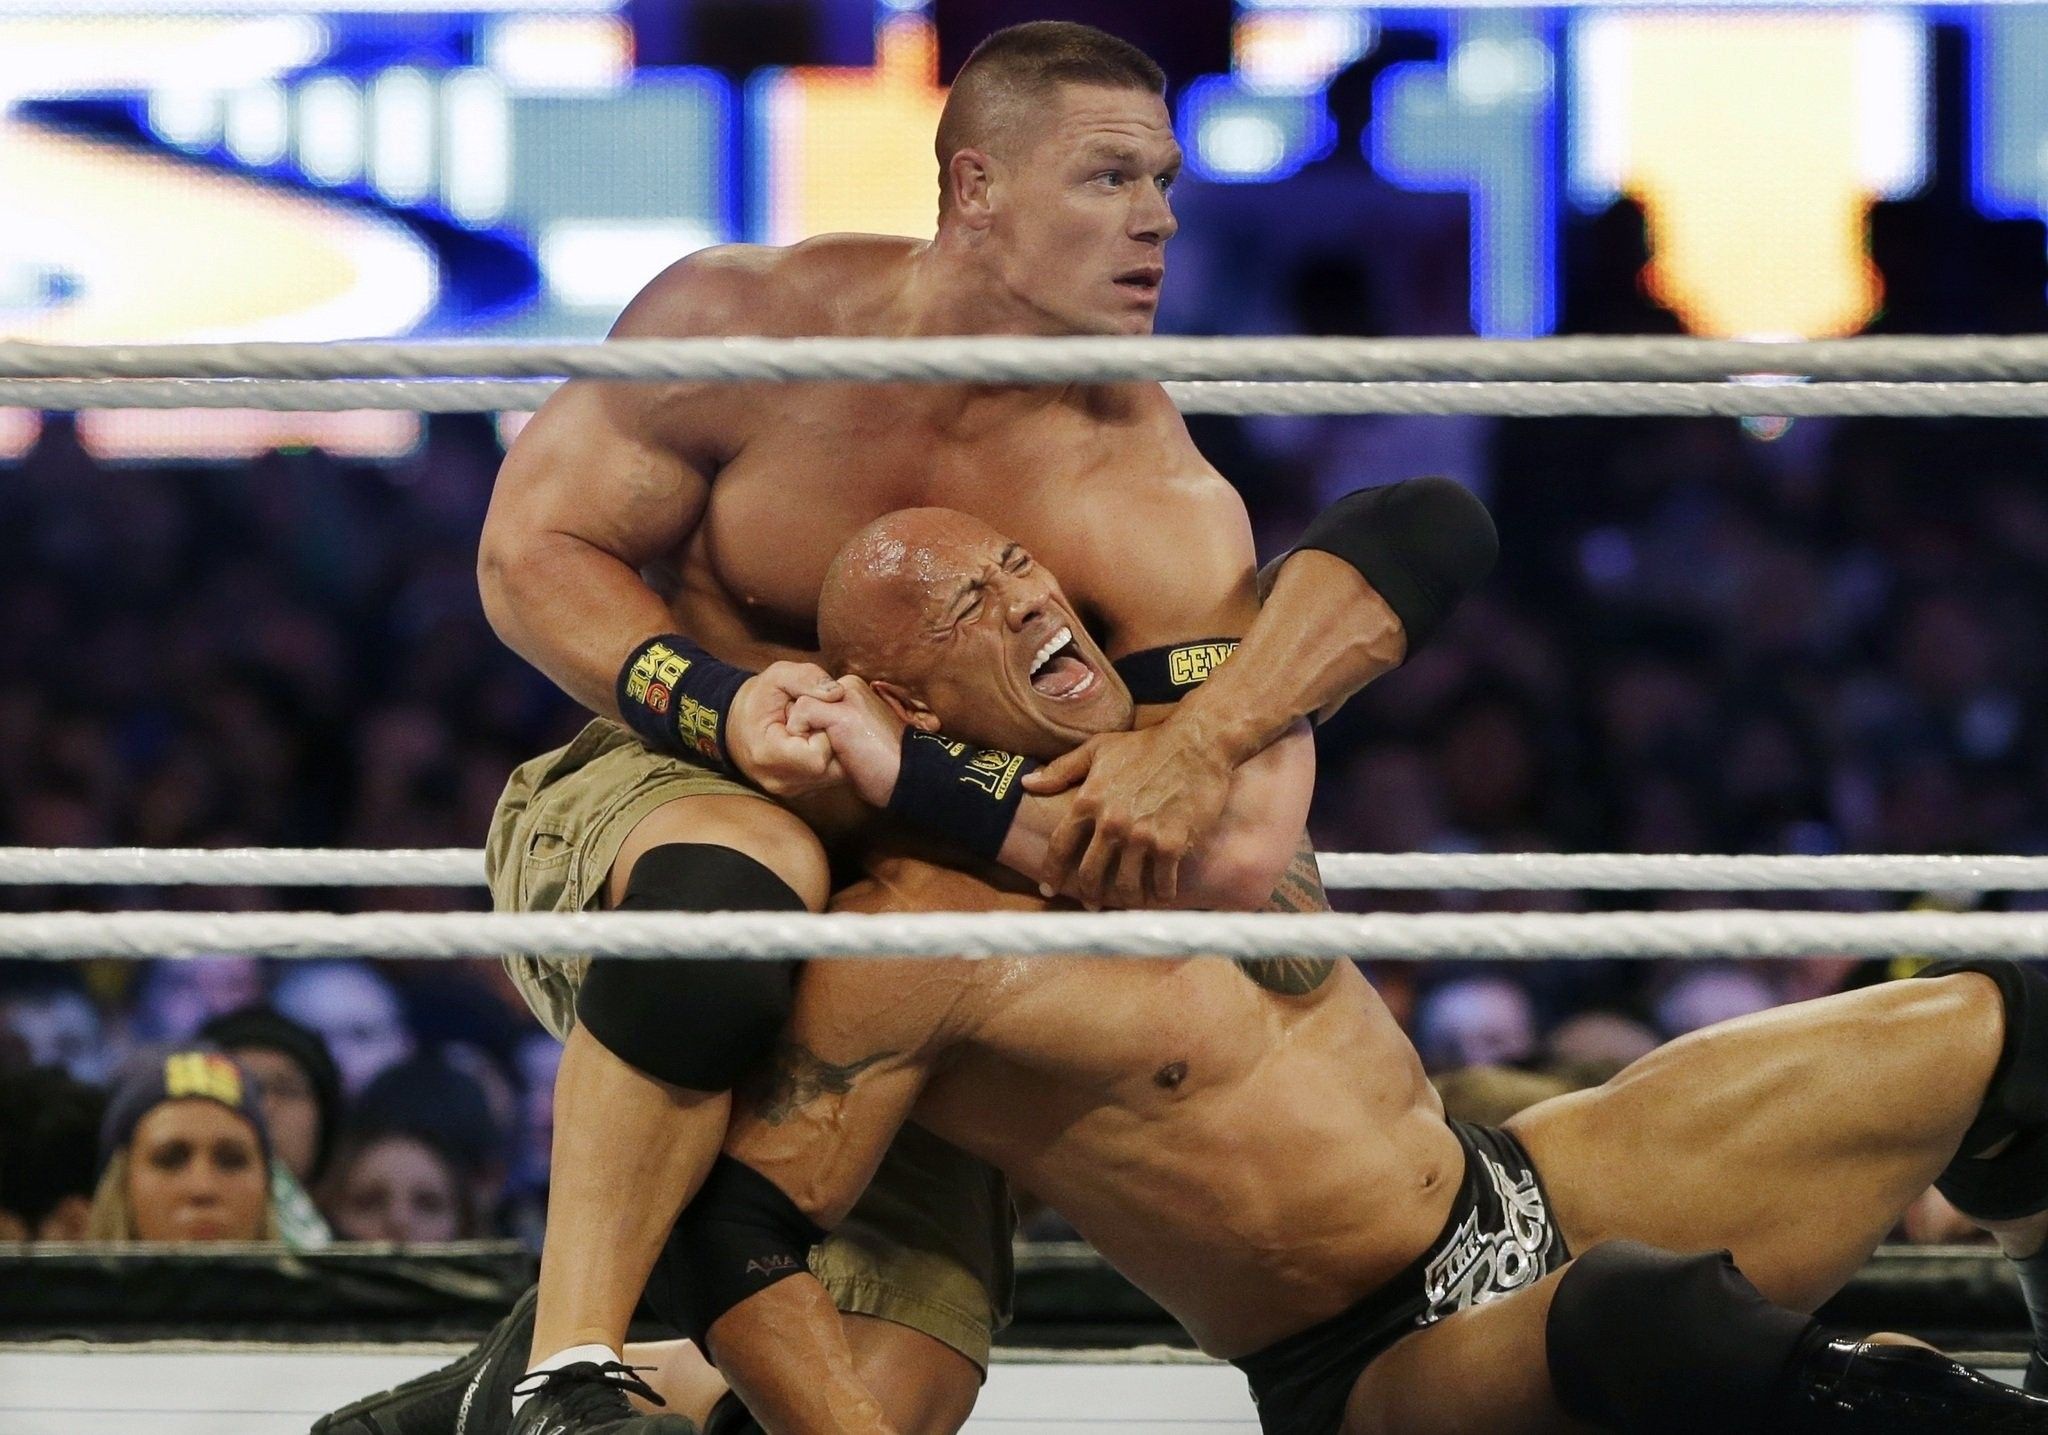 Download 2048x1435 John Cena Fight With Rock in Wrestlemania 29 wallpaper